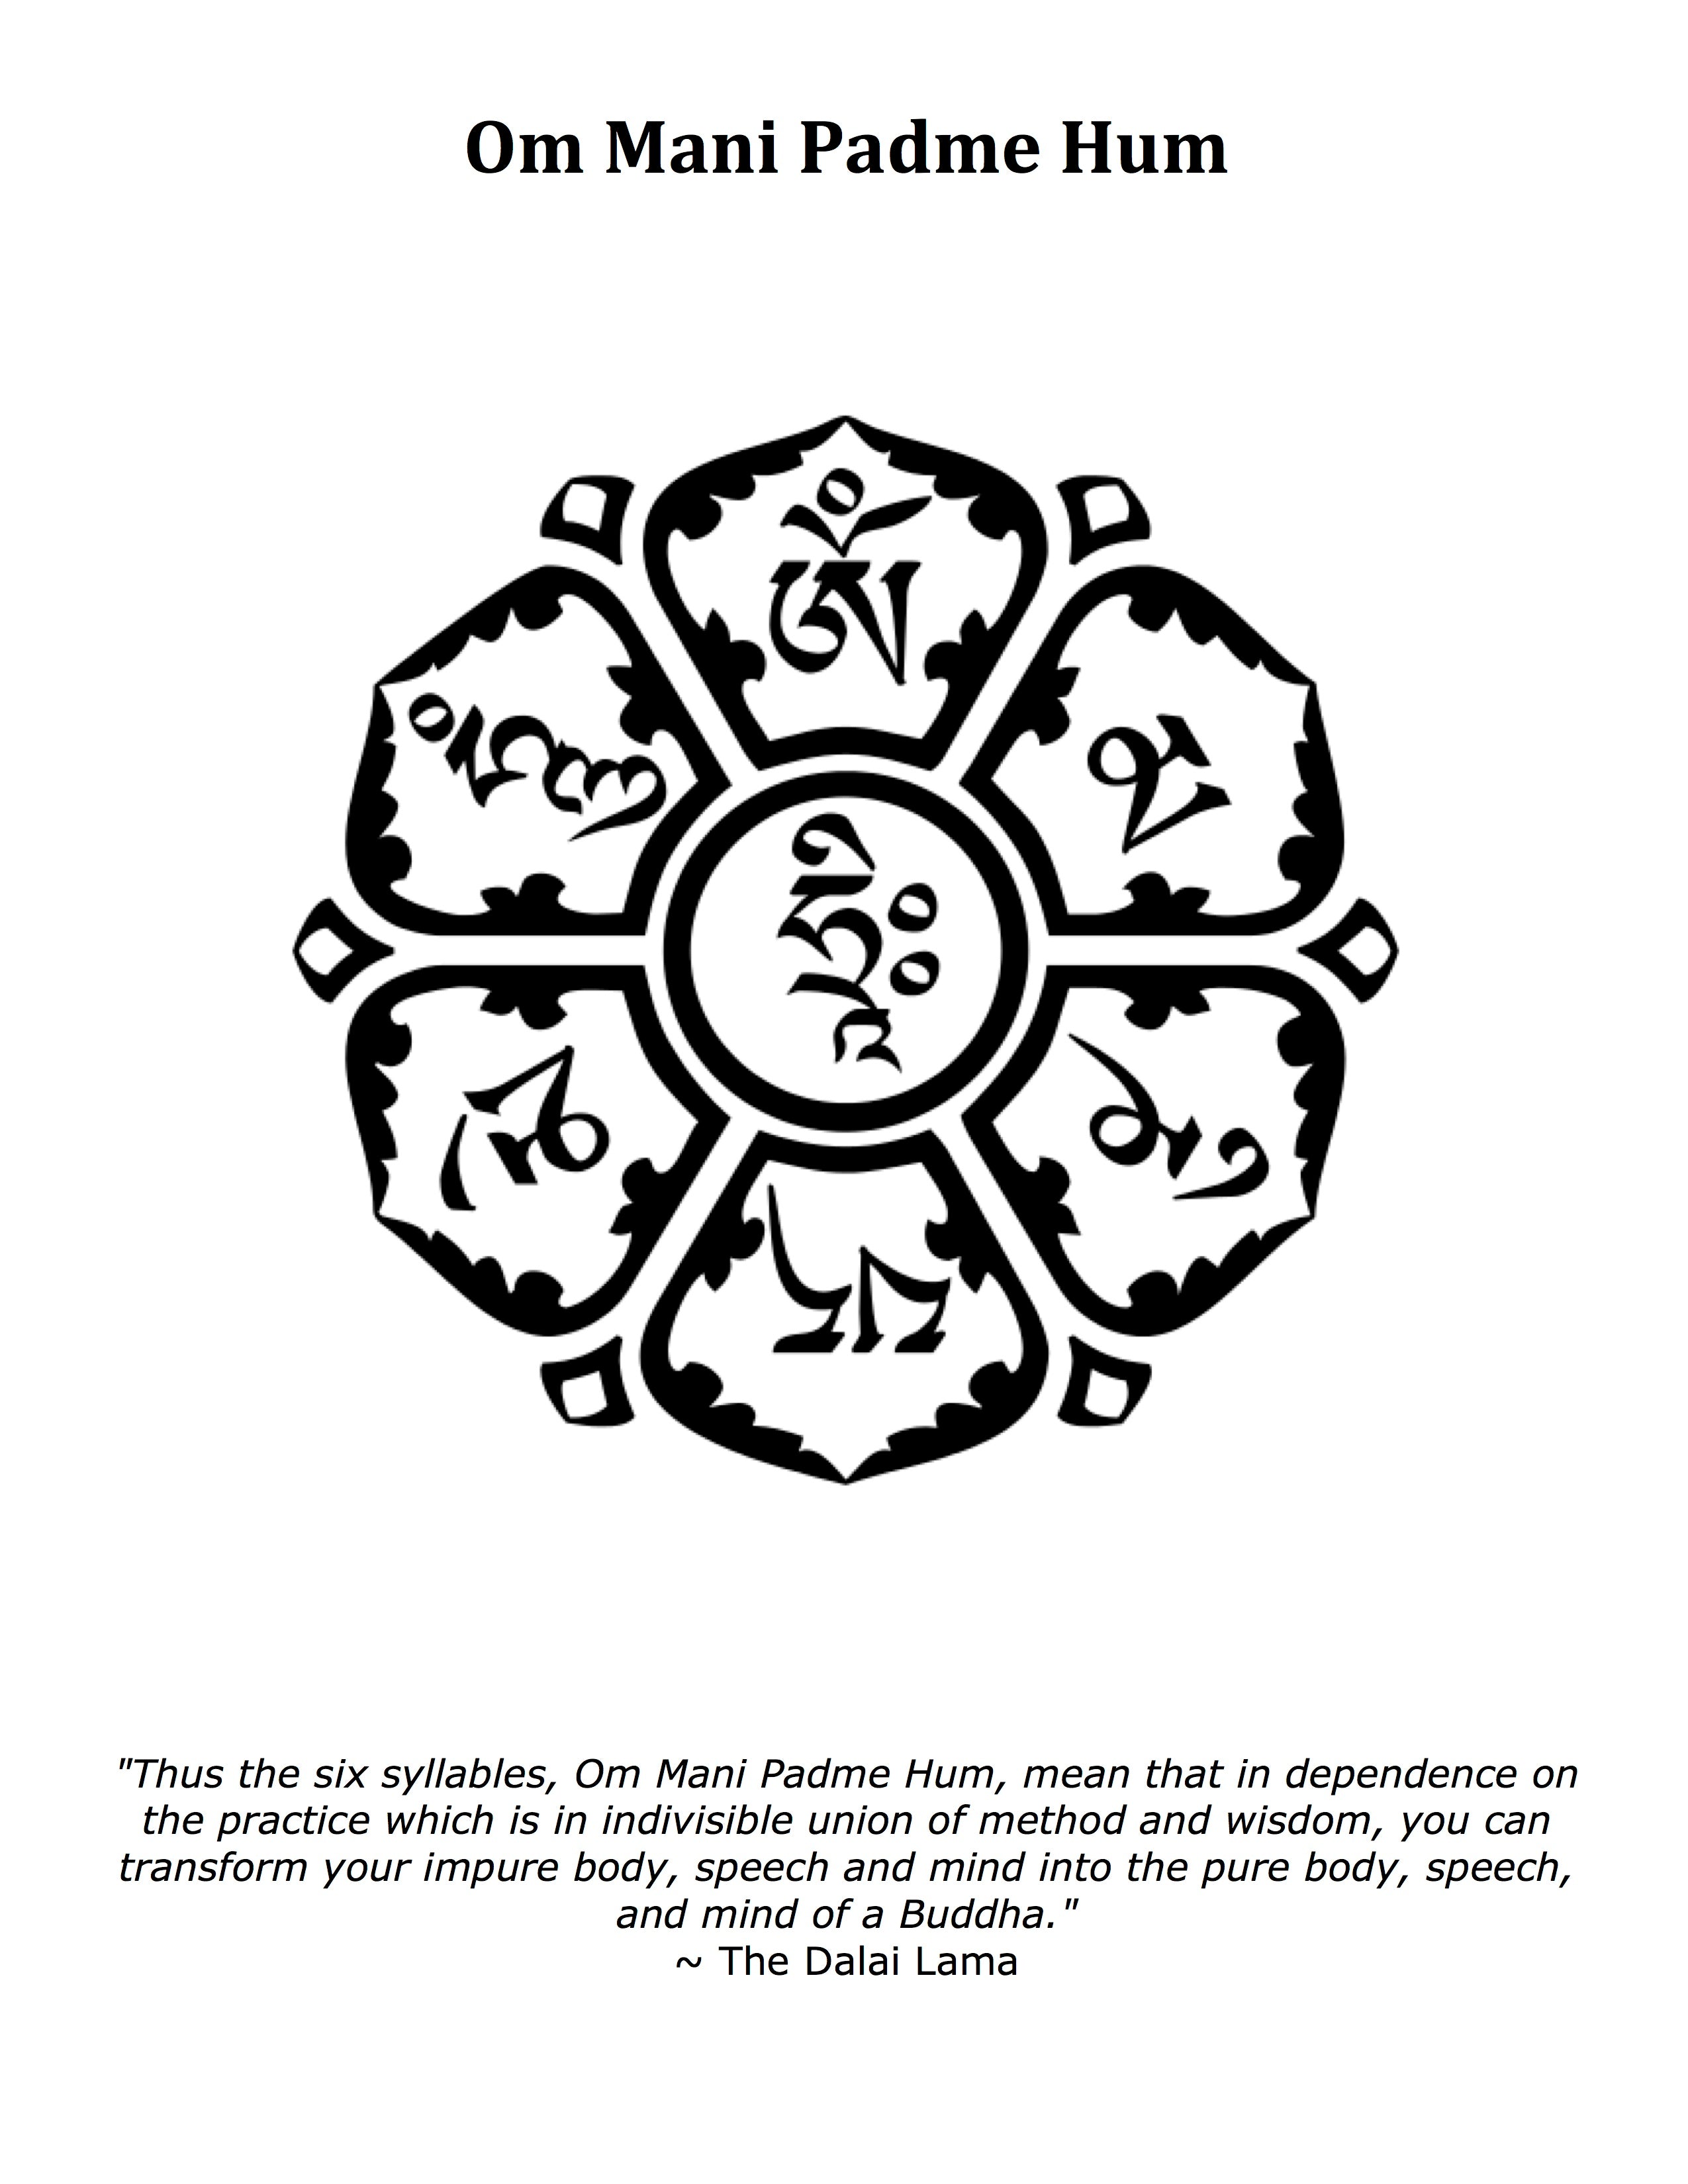 OM Mani Padme Hum Mantra Symbol in a Mandala